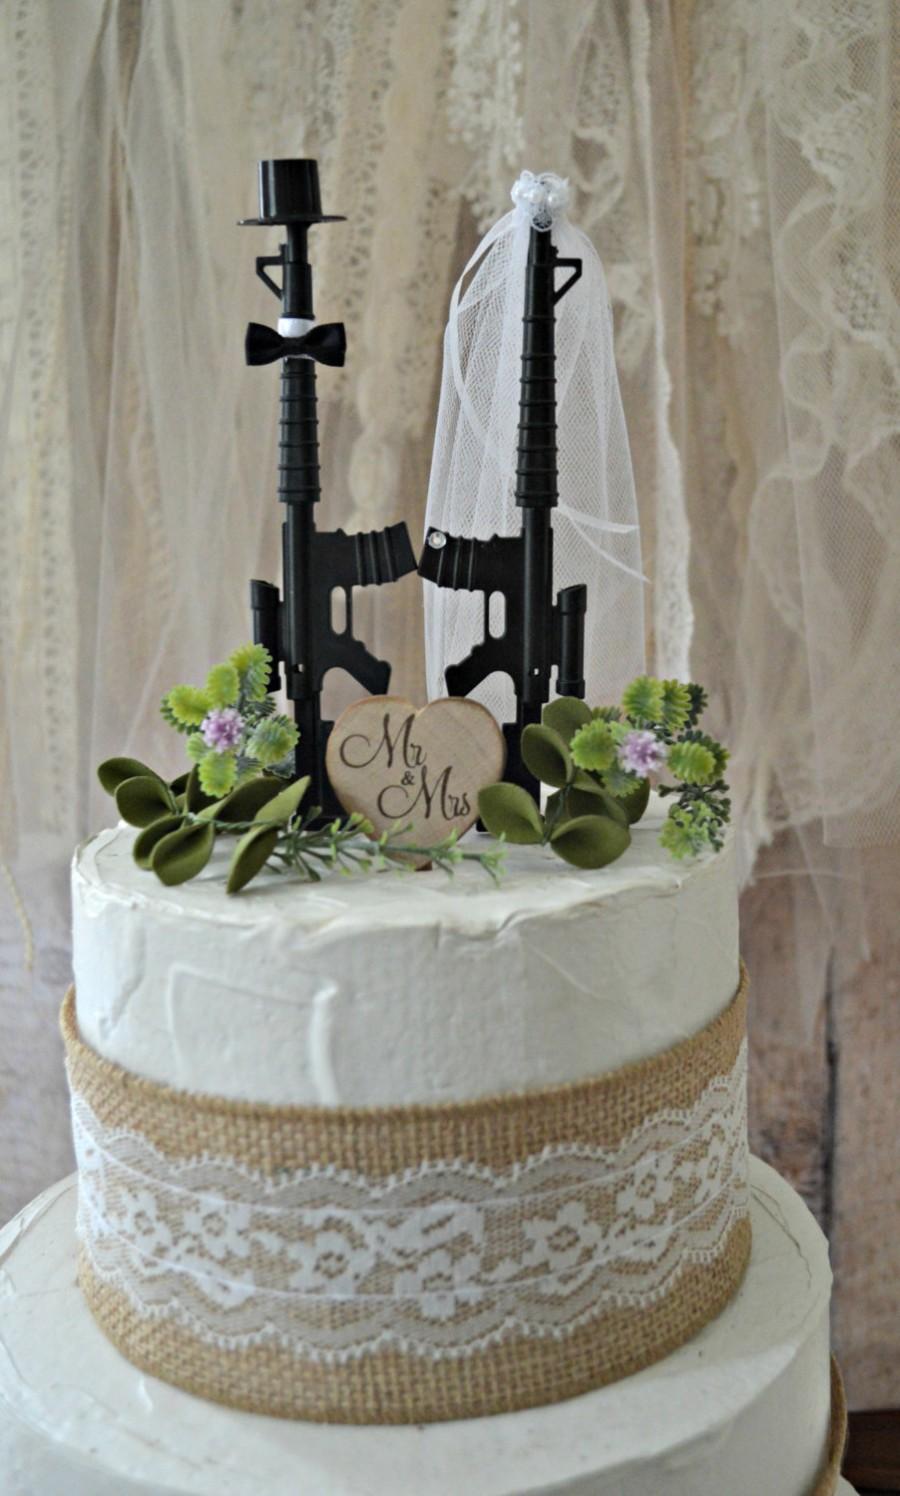 زفاف - Machine gun weapon wedding cake topper army police themed hunting groom's cake Mr & Mrs sing the hunt is over gun decorations military sign